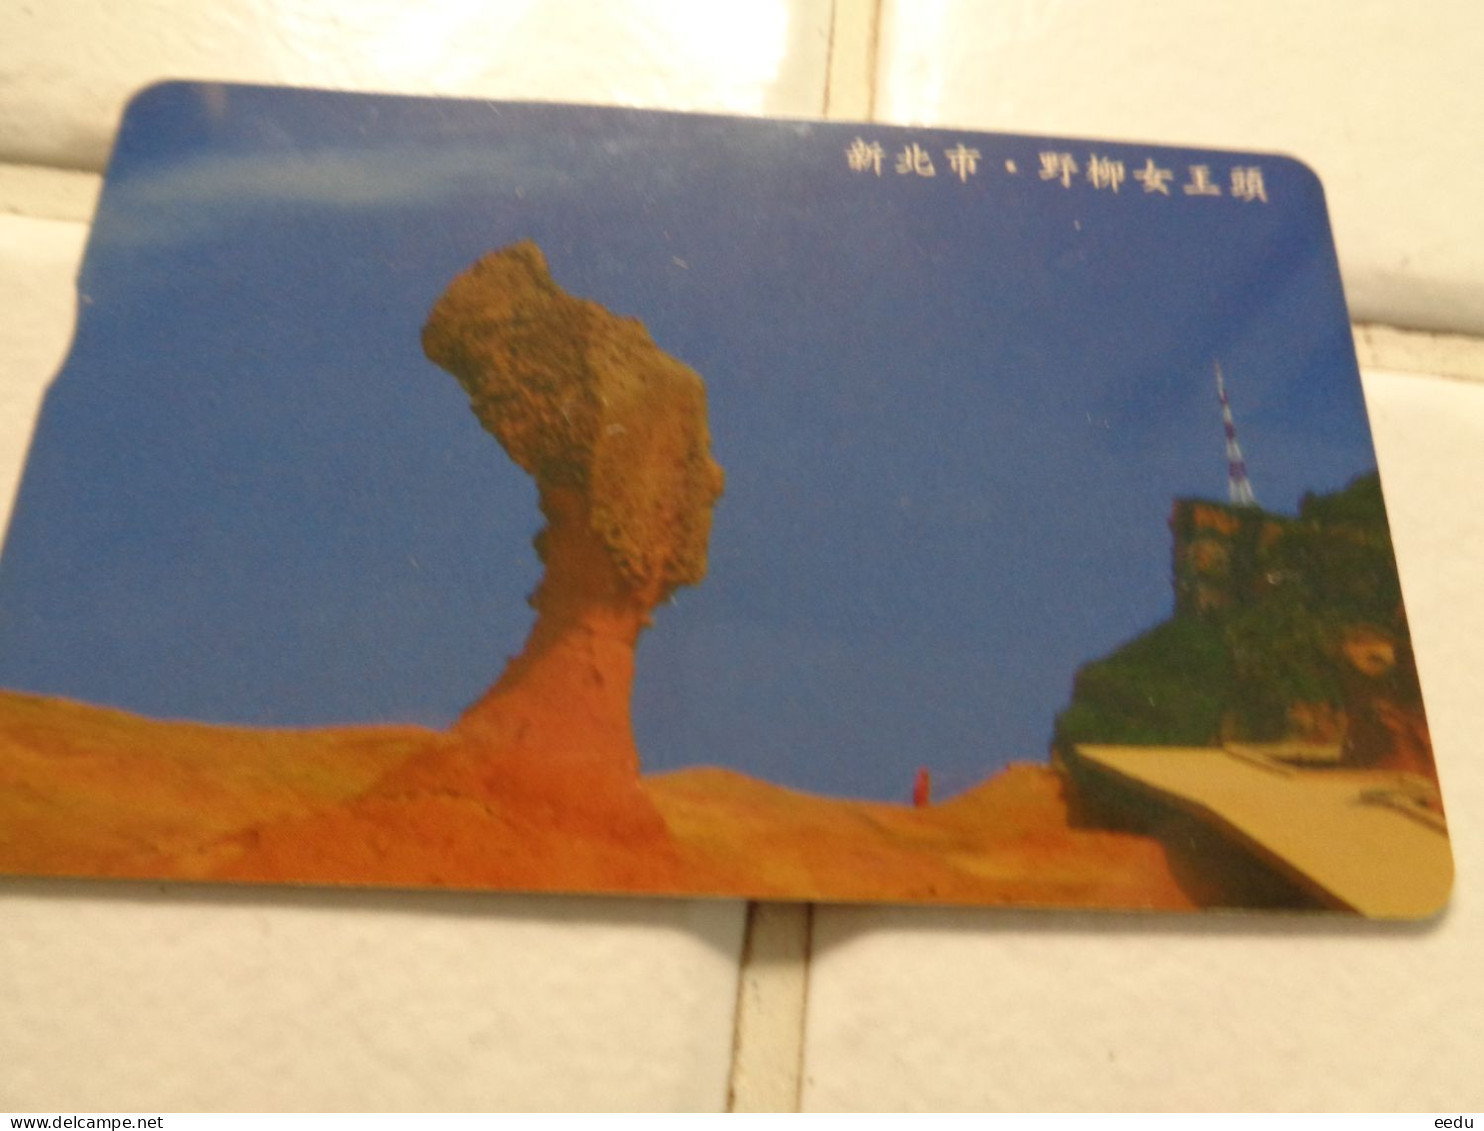 Taiwan Phonecard - Taiwan (Formosa)